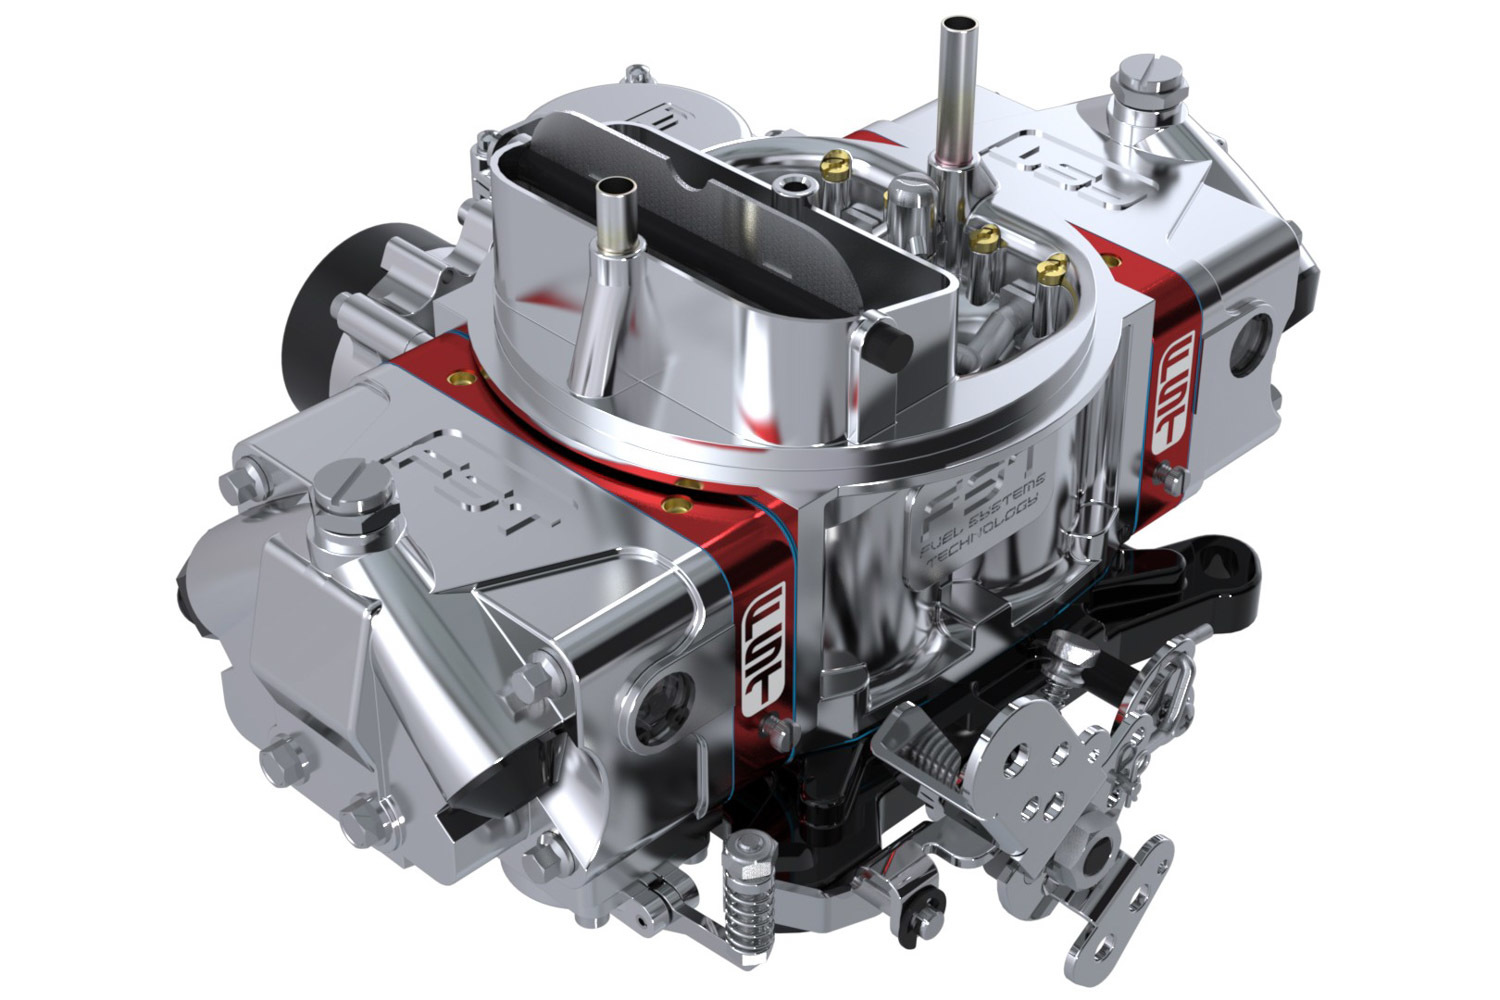 FST Carburetor 41750X Carburetor, RT-X, 4-Barrel, 750 CFM, Square Bore, Electric Choke, Vacuum Secondary, Dual Inlet, Polished, Each